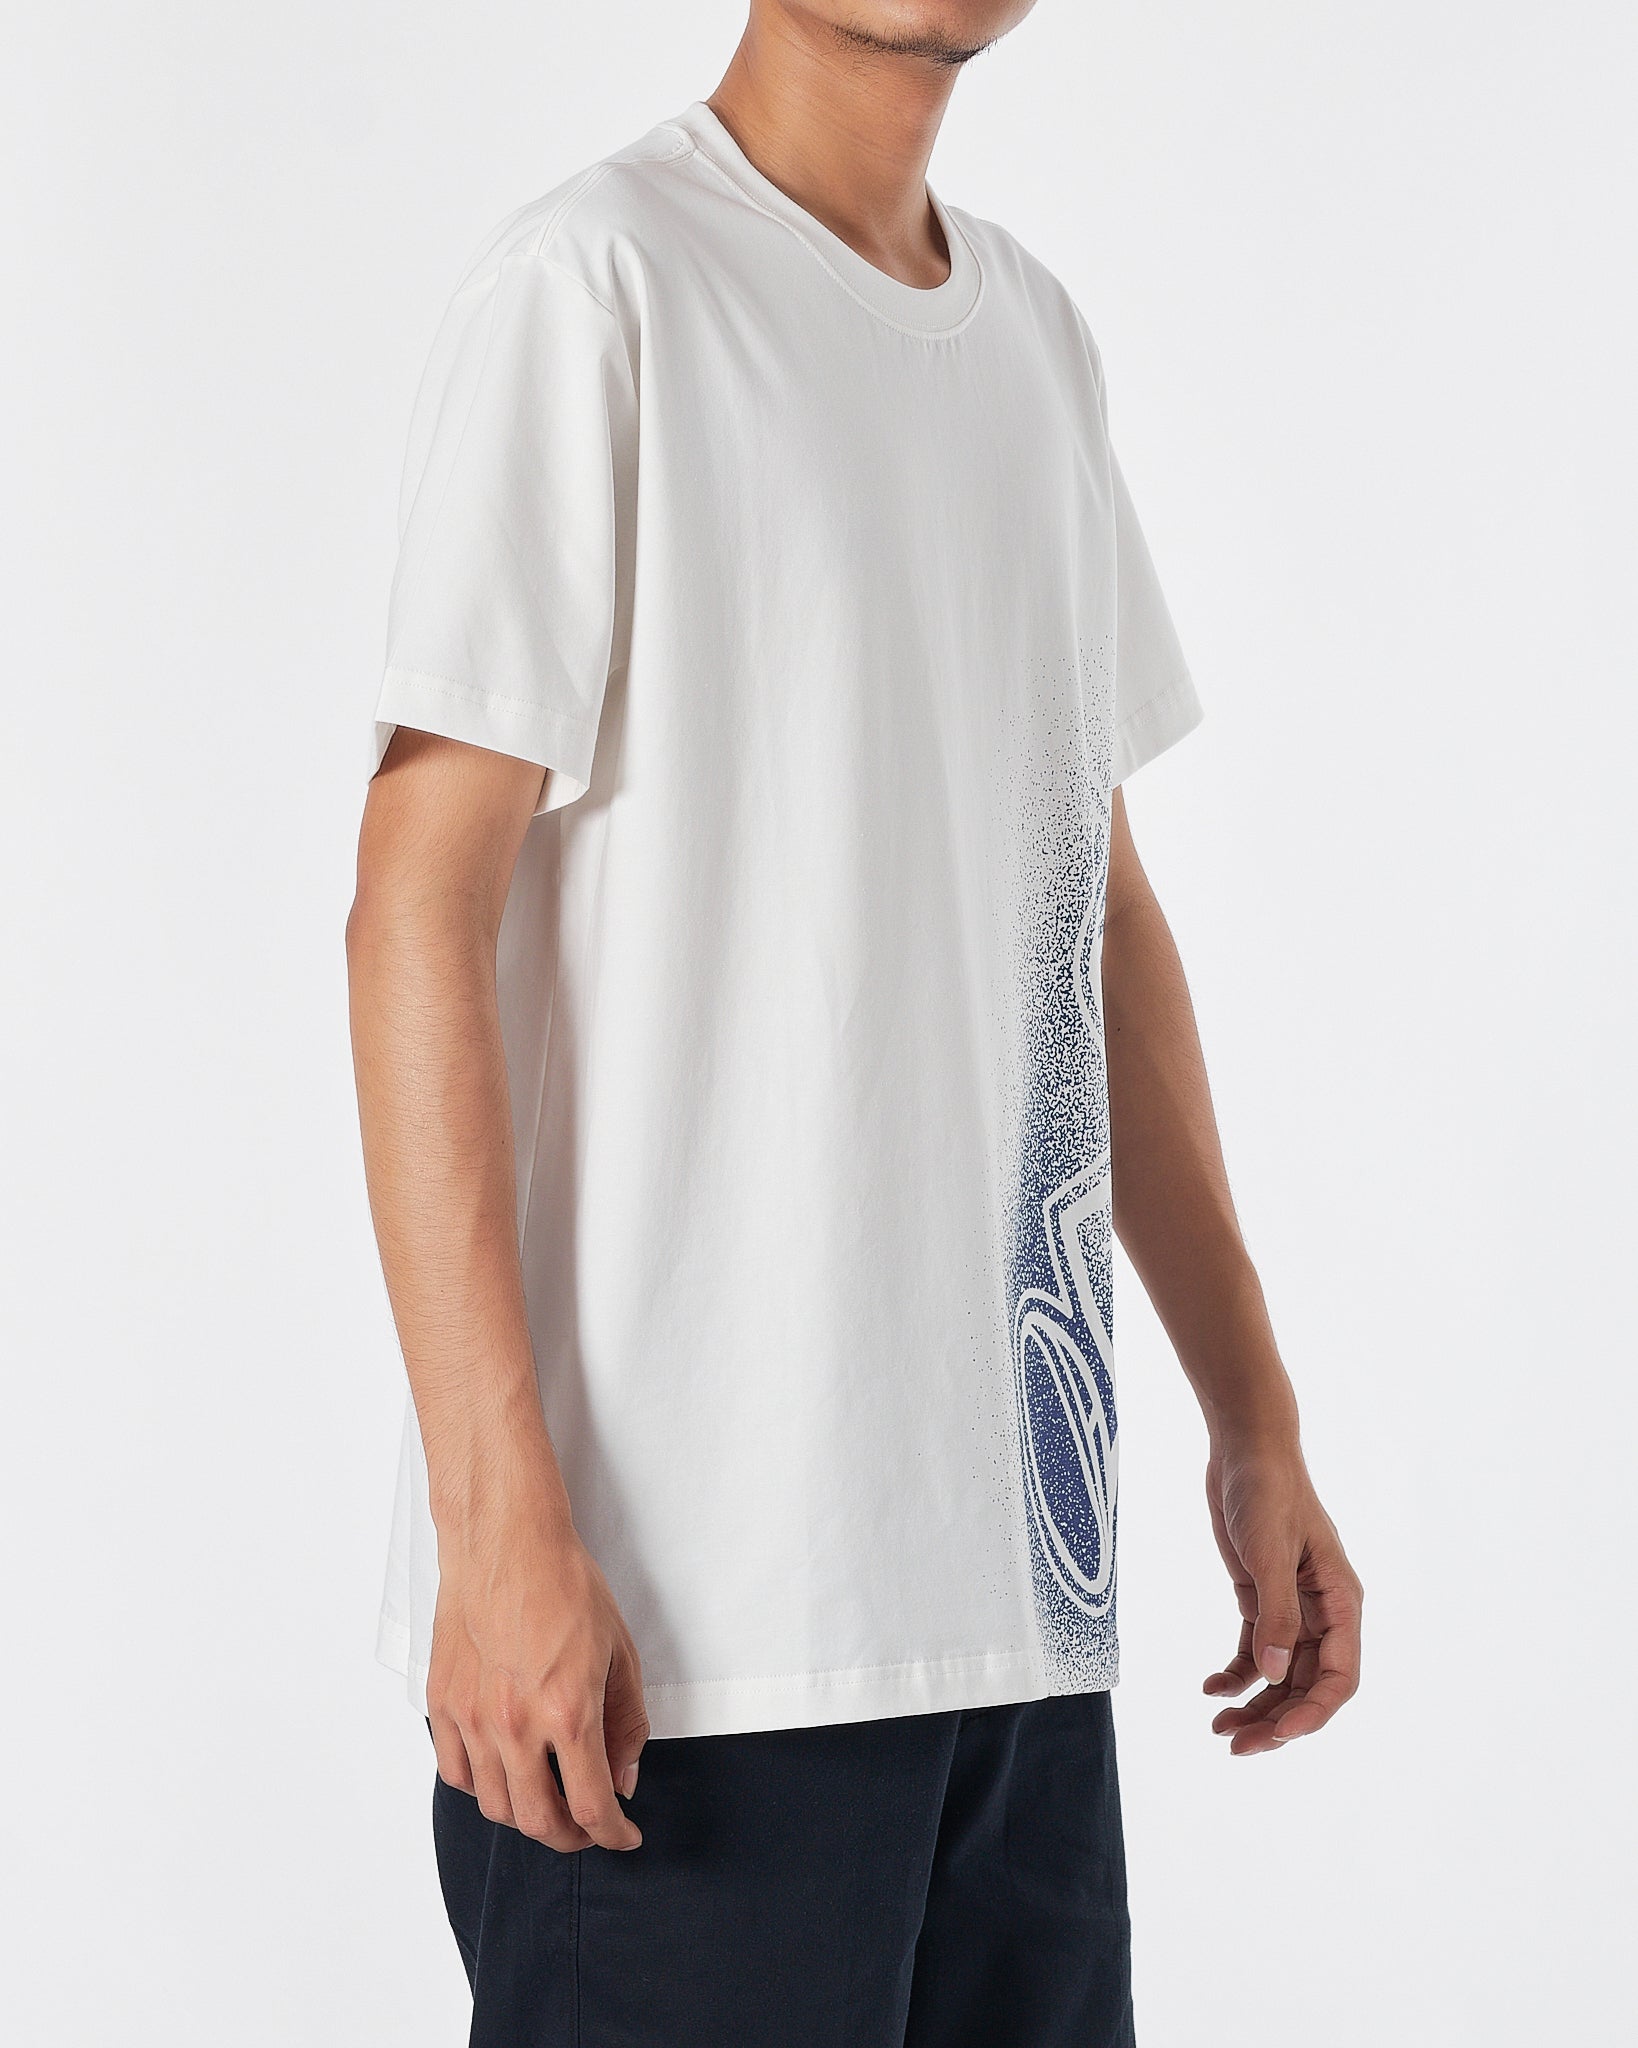 MON Logo Printed Men White T-Shirt 15.90